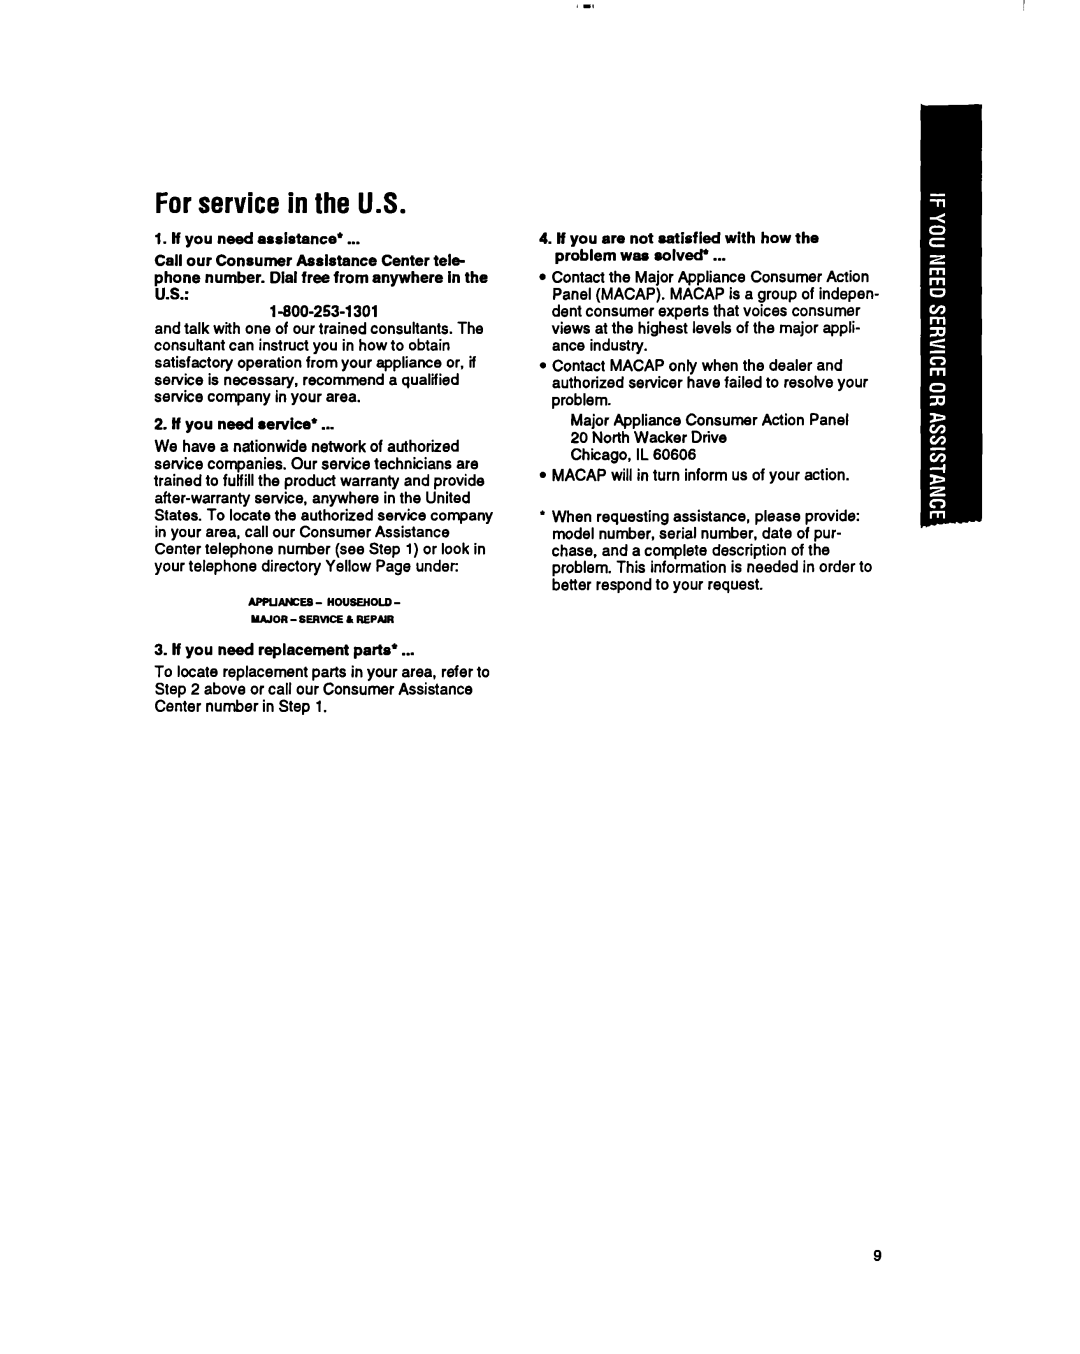 Whirlpool RH123A1 manual Forservice in the U.S 